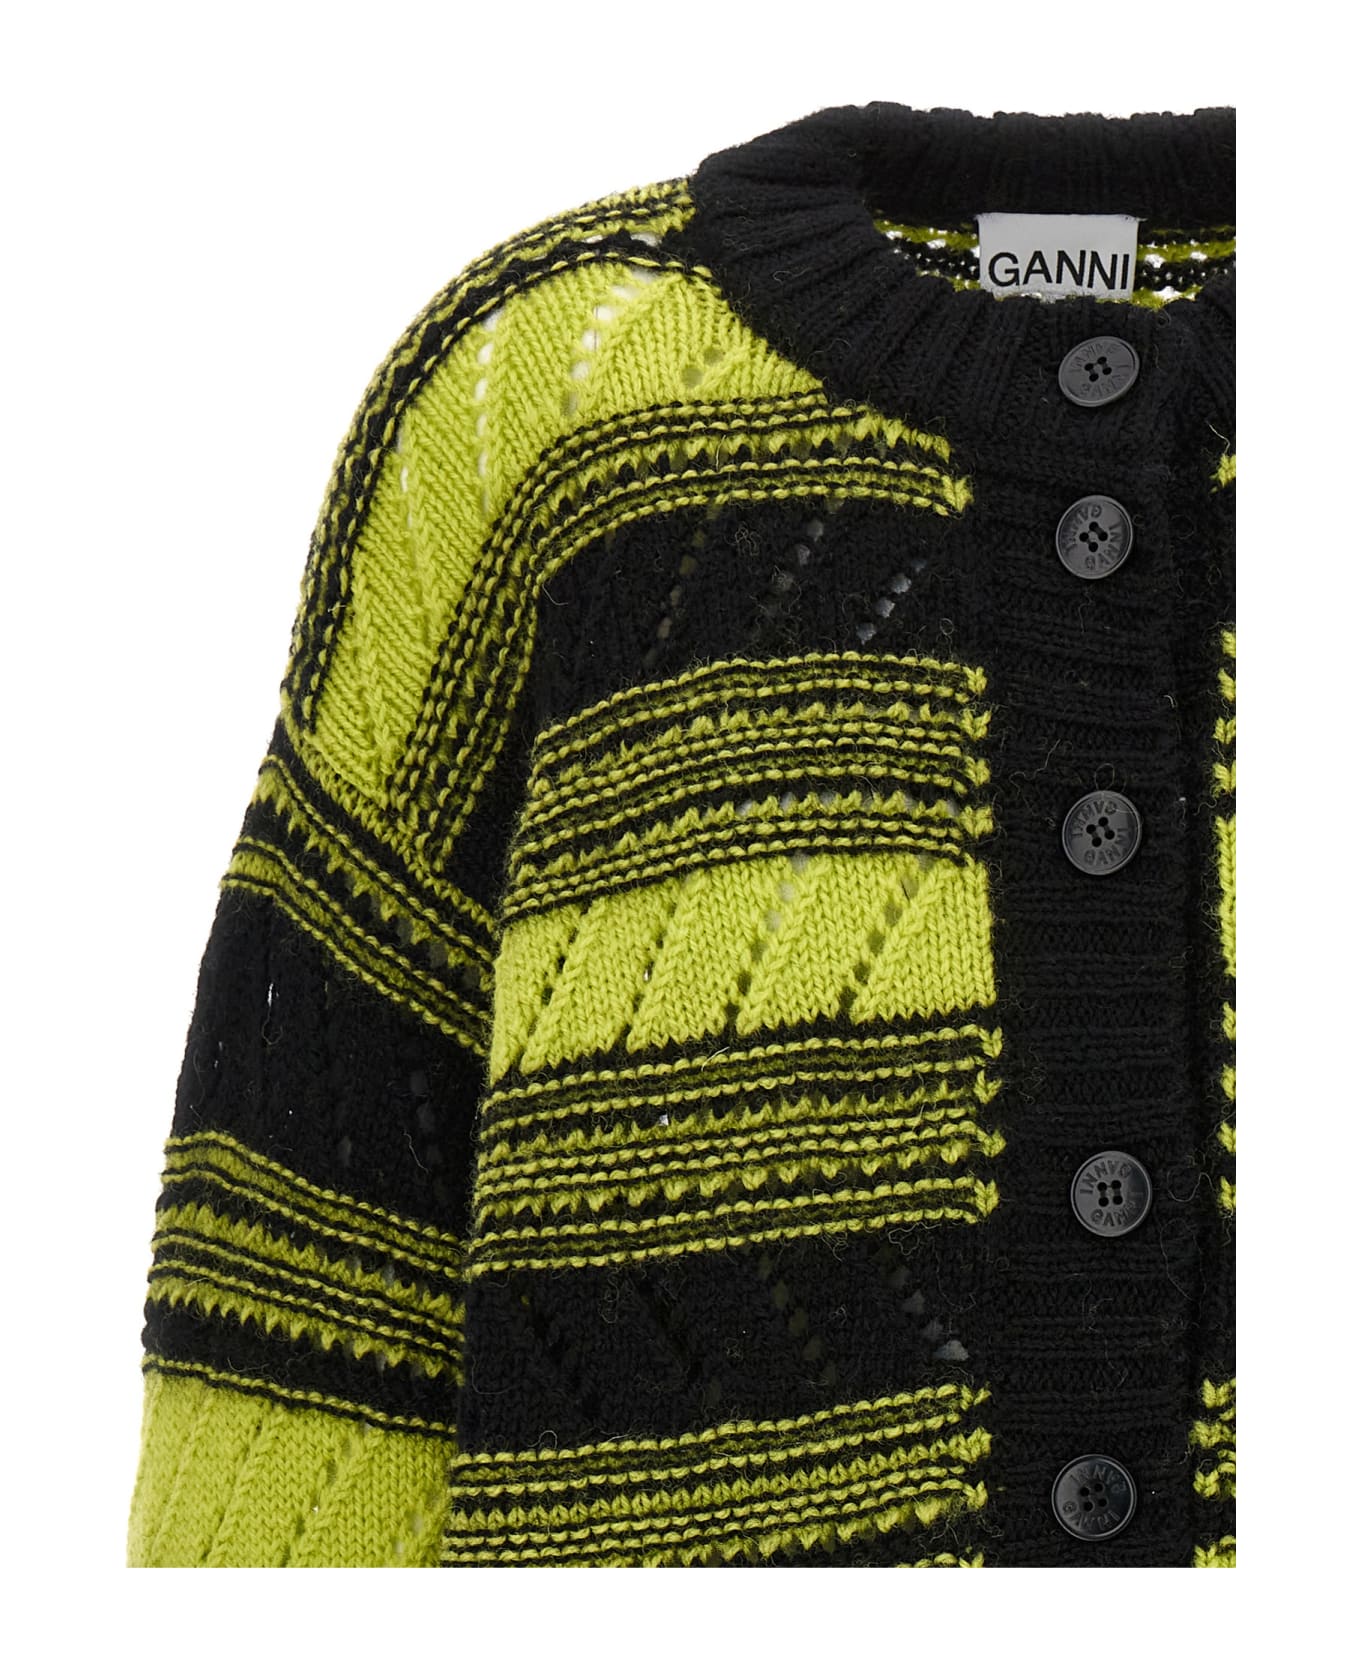 Ganni Yellow And Black Wool Cardigan - Multicolor